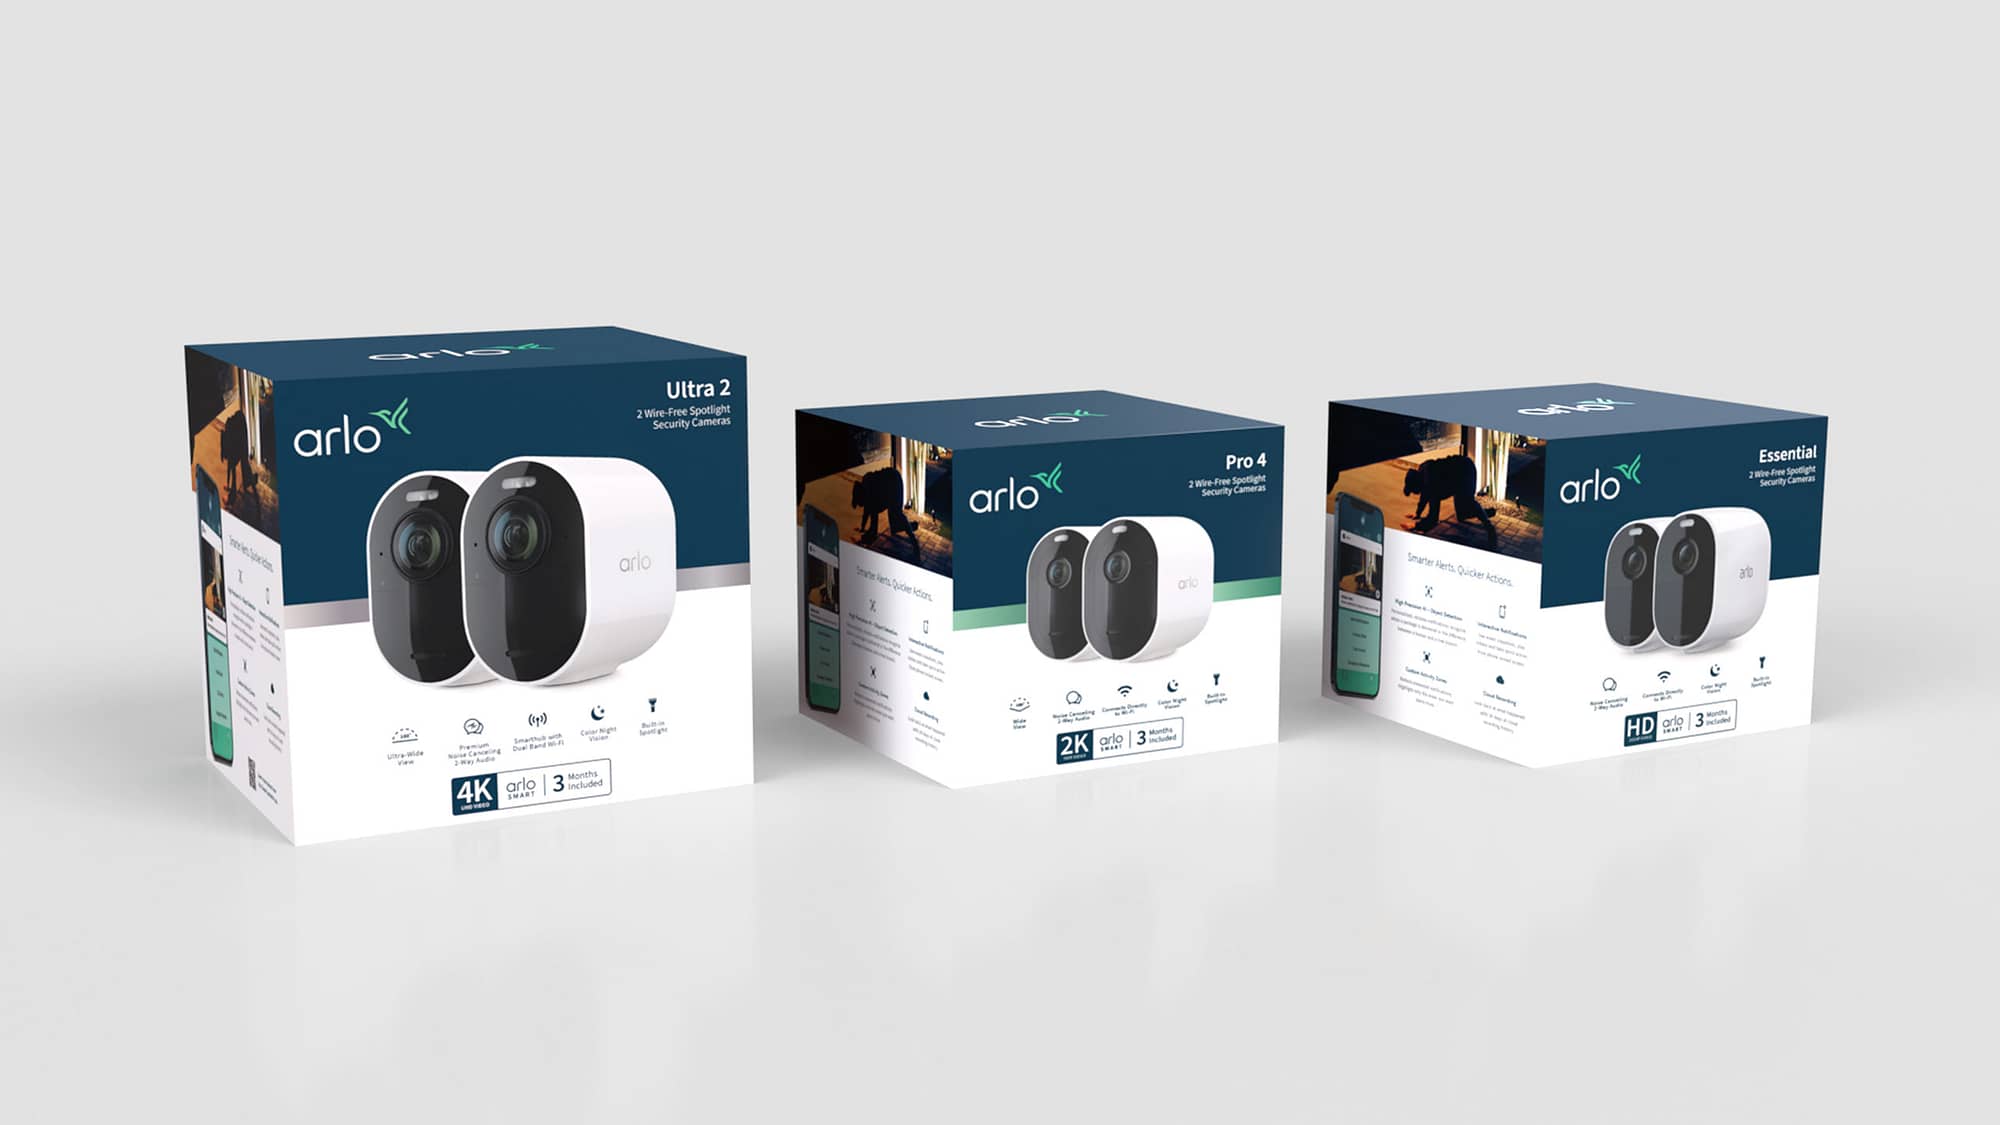 3D render of 3 Arlo security camera boxes, showcasing Arlo rebrand and new packaging design.